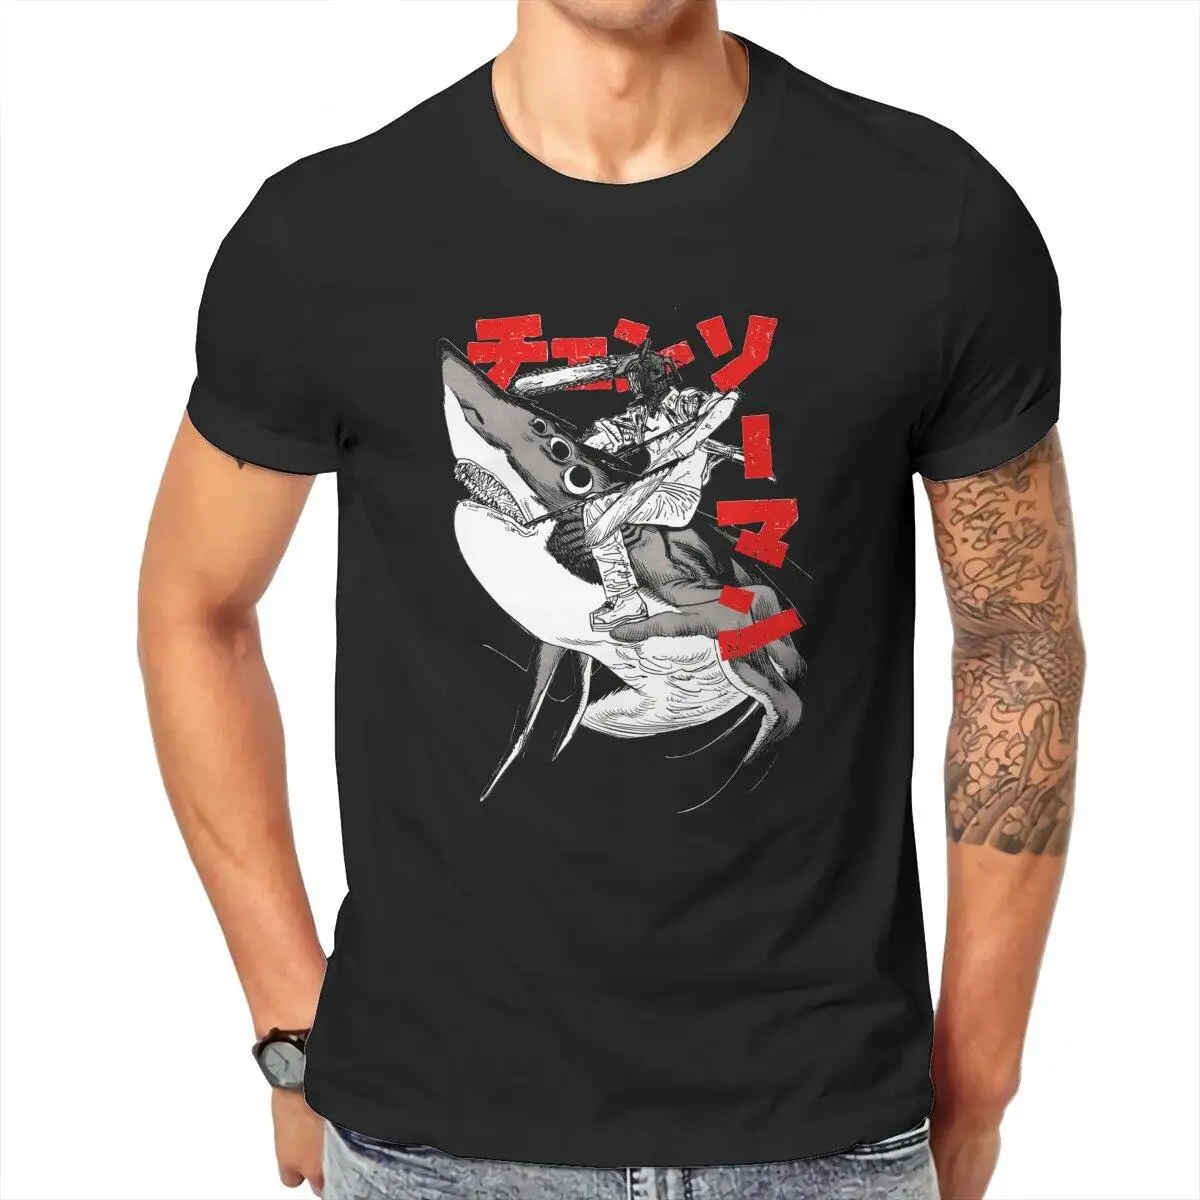 Novelty Chainsaw Man Riding Shark  T-Shirt for Men Crew Neck 100% Cotton T Shirts  Short Sleeve Tee Shirt Birthday Gift Tops